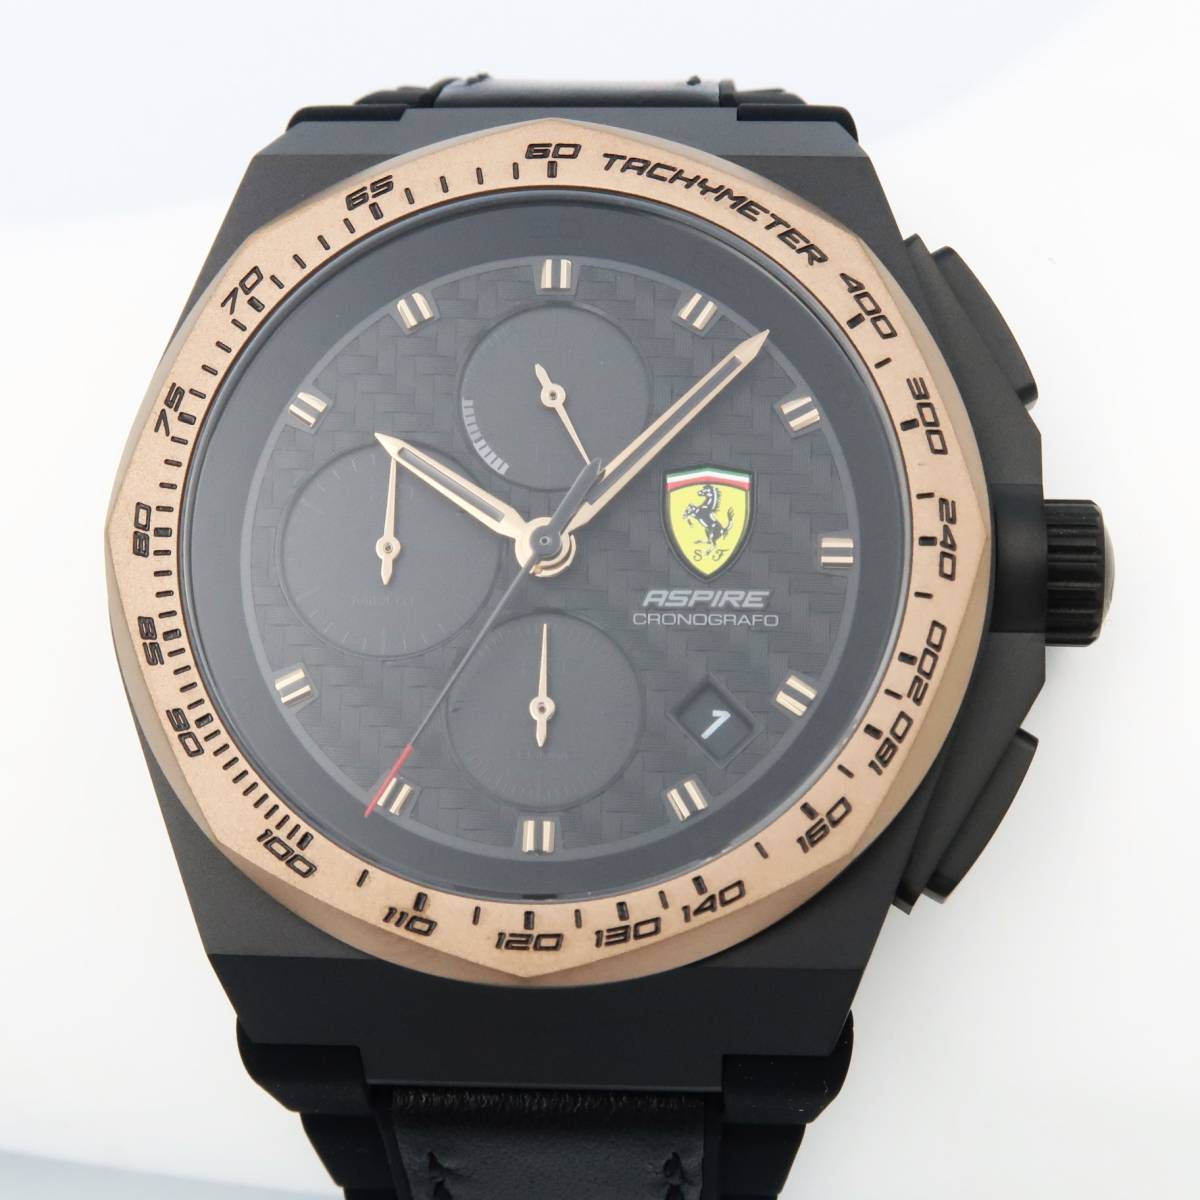 Scuderia Ferrari フェラーリ 腕時計 クロノグラフ Aspire 